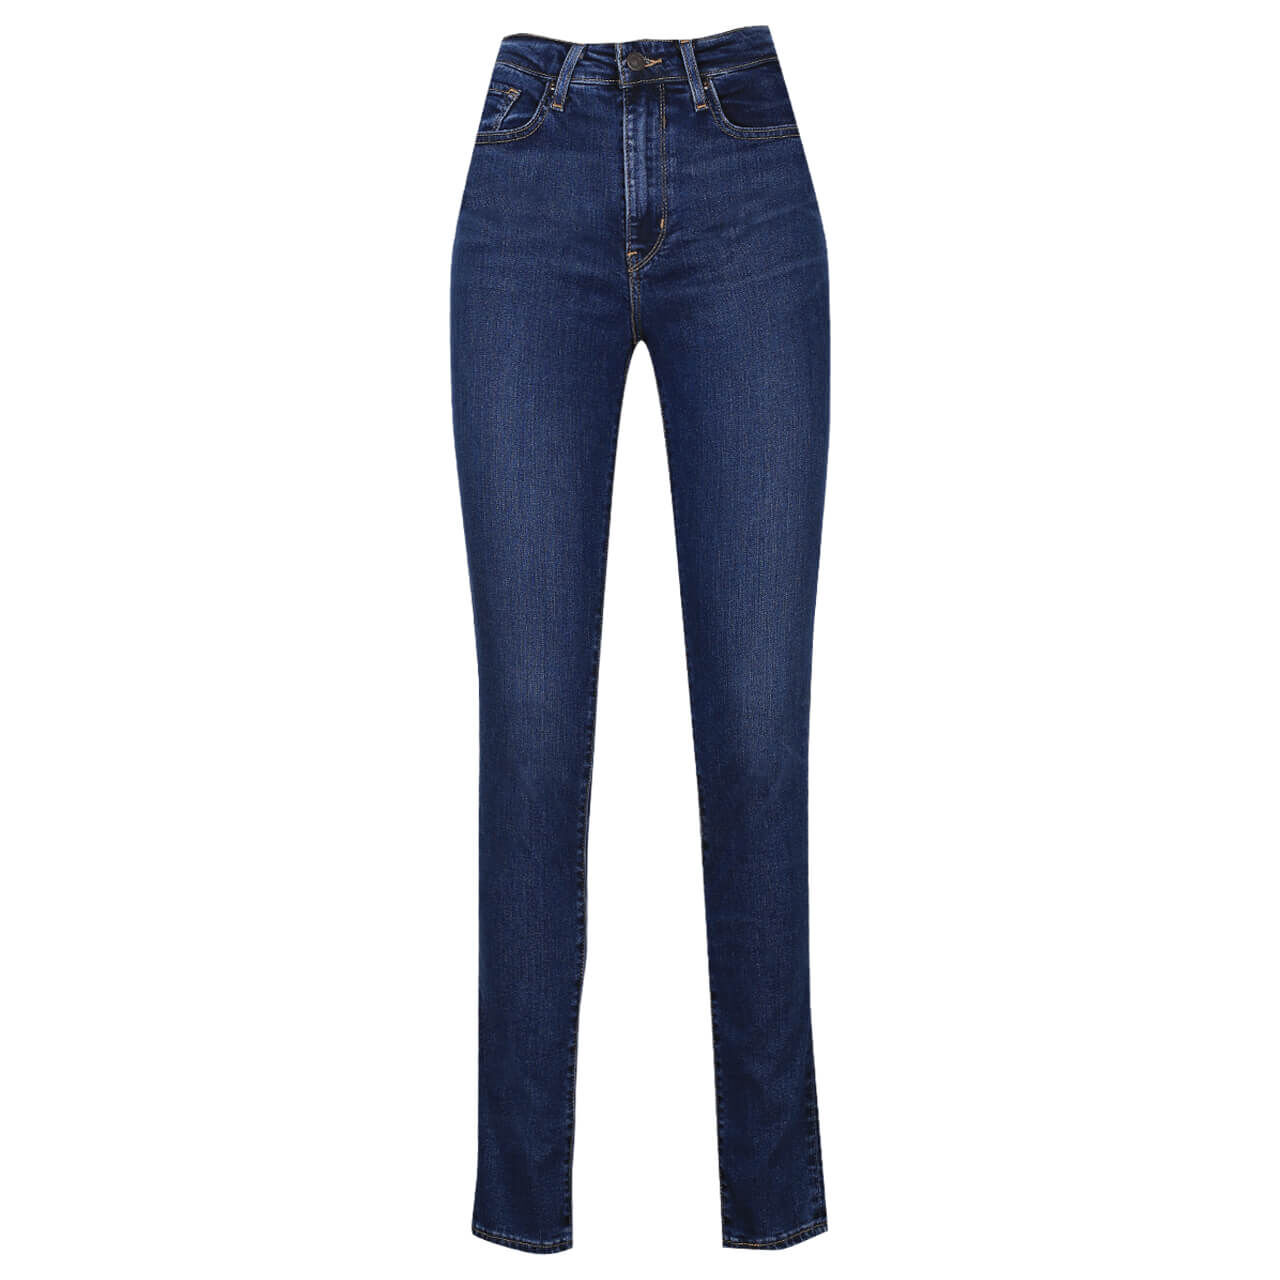 Levi's® Jeans 721 Skinny für Damen in Dunkelblau, FarbNr.: 0540